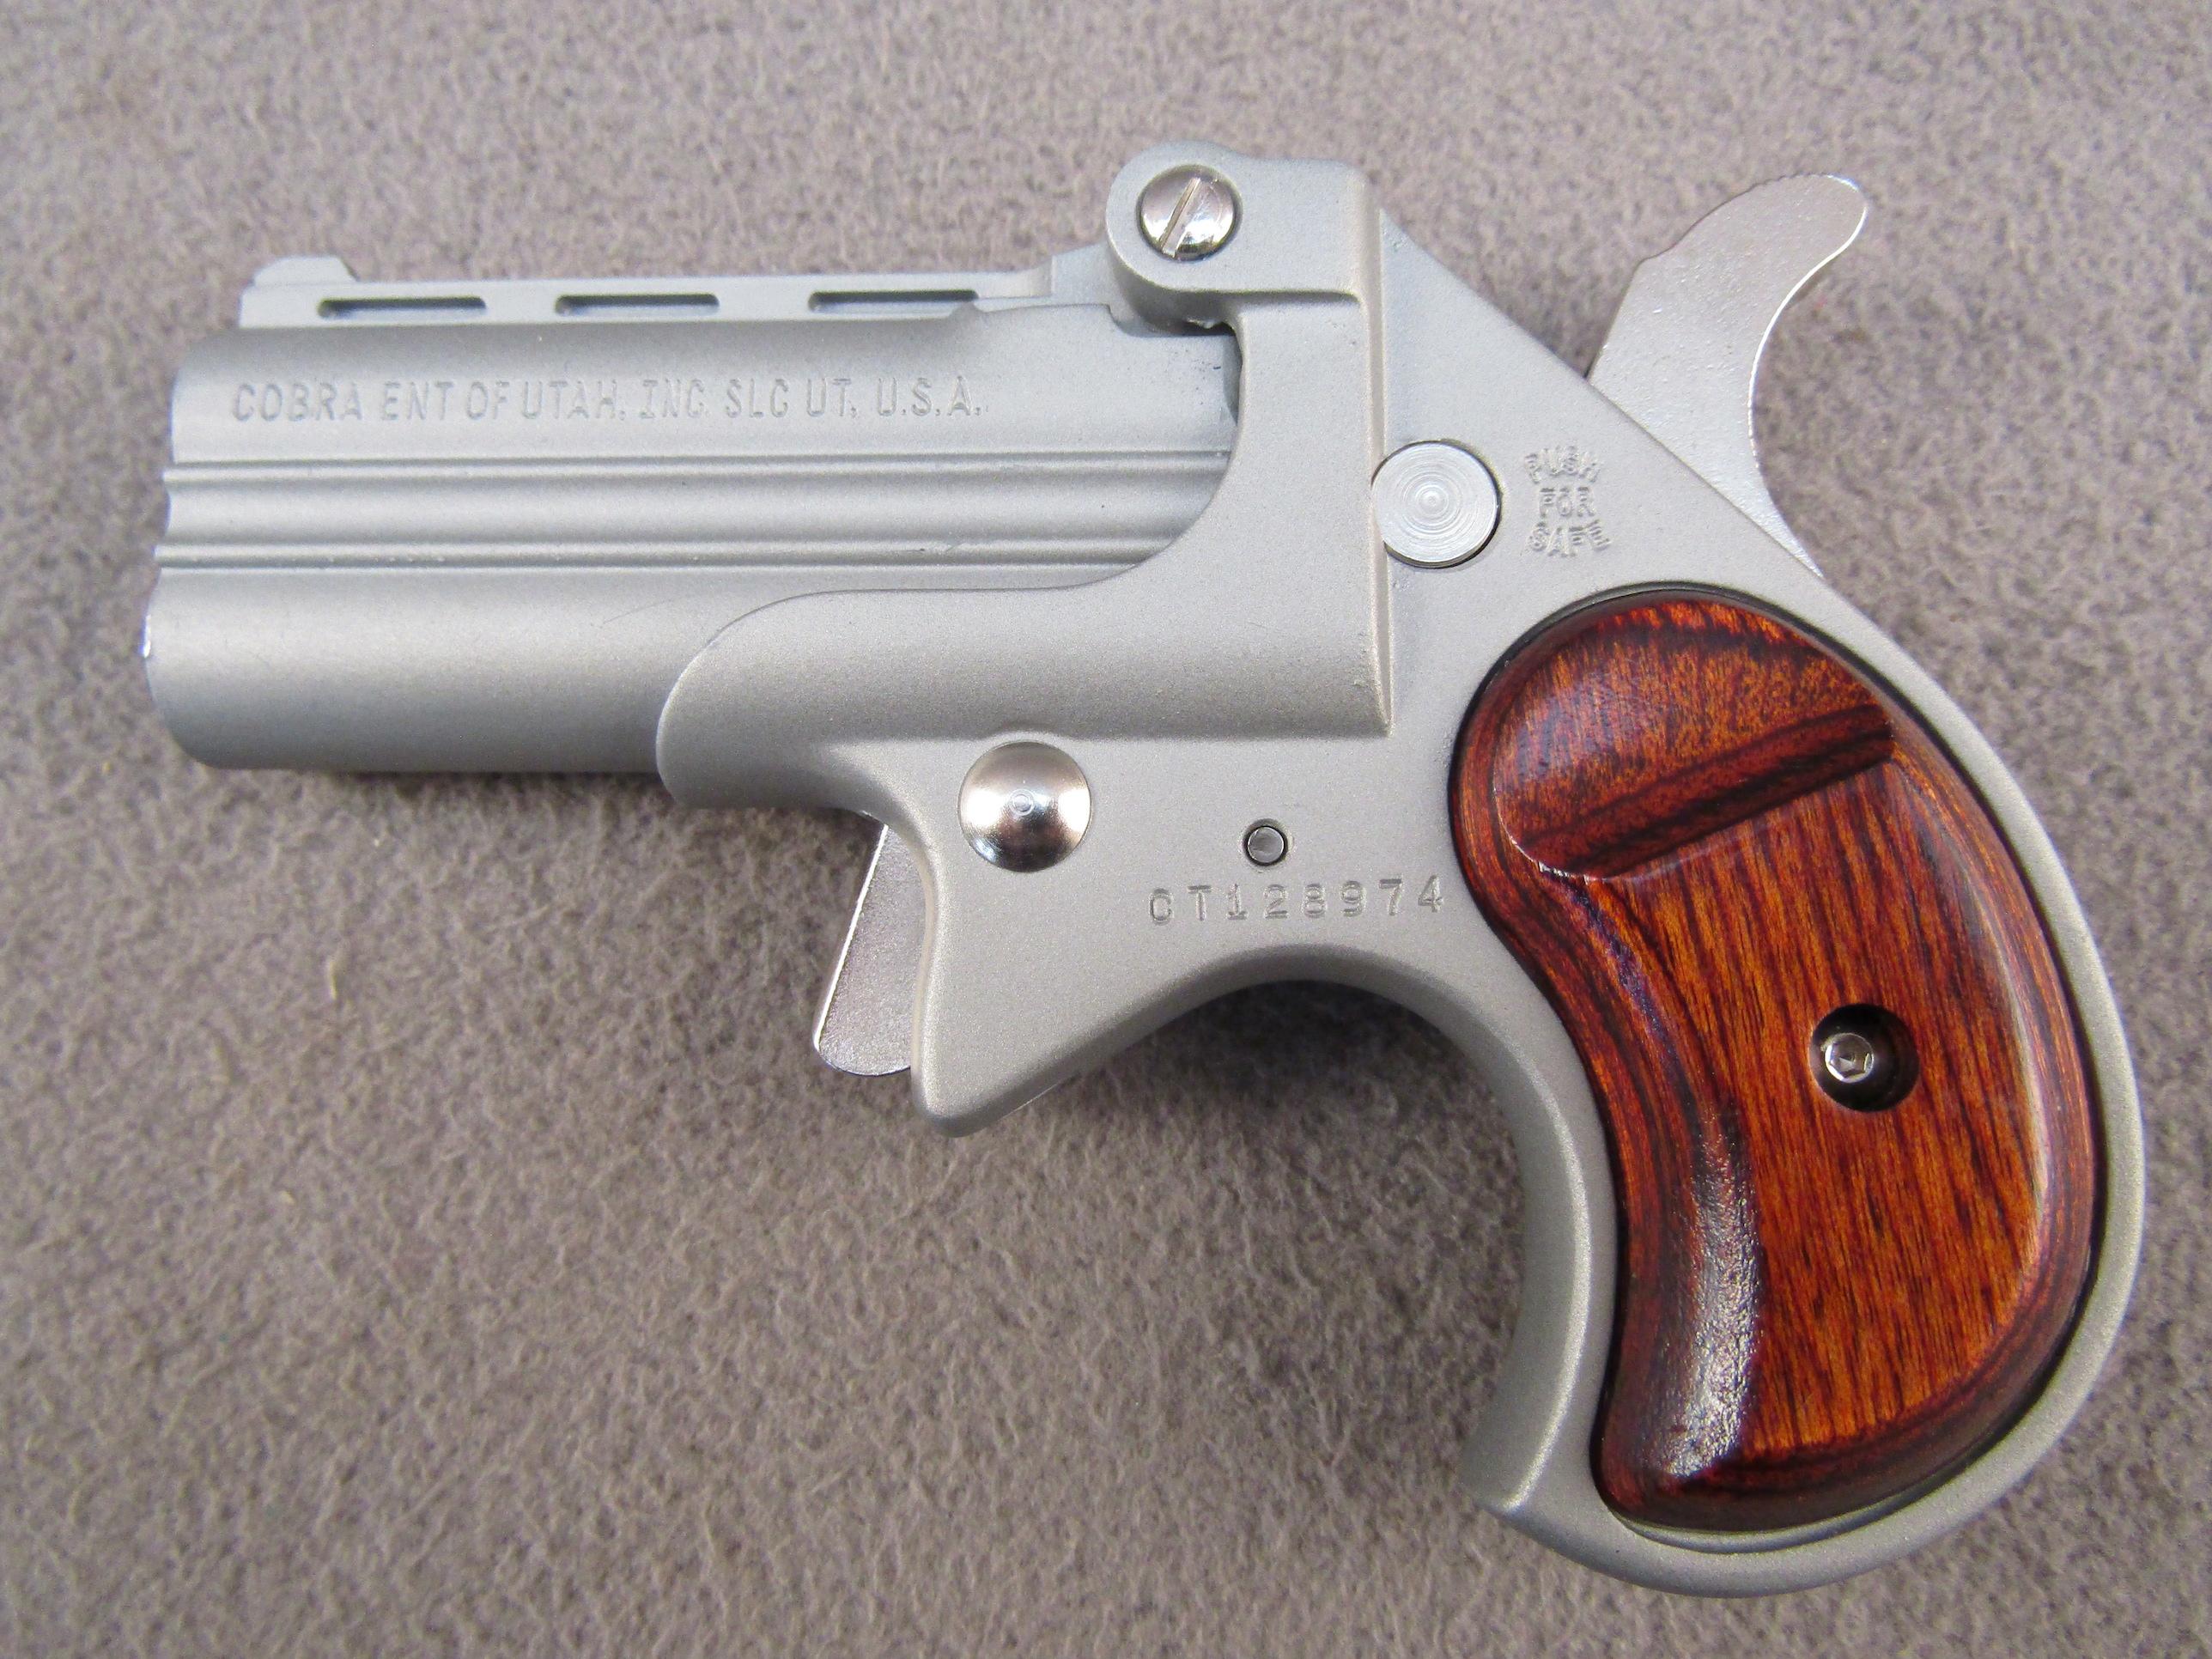 handgun: COBRA ENT Model CB22M, Single-Shot Derringer, .22, 2 shot, 2.5" barrel, S#CT128974